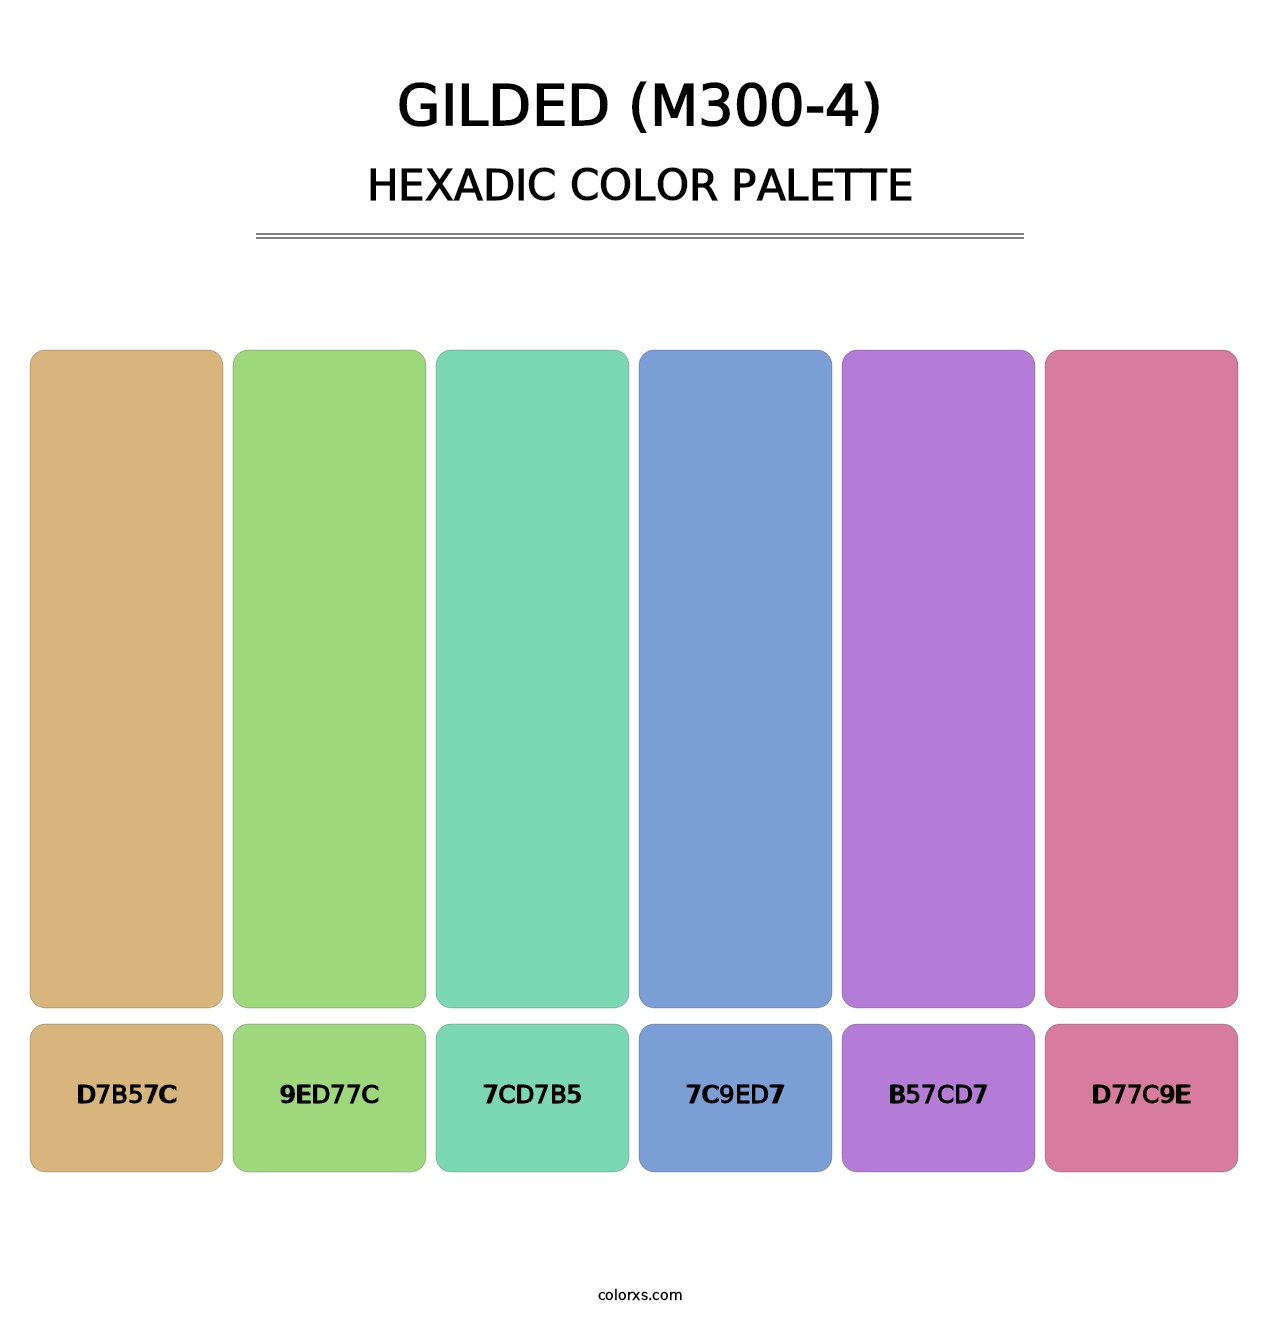 Gilded (M300-4) - Hexadic Color Palette